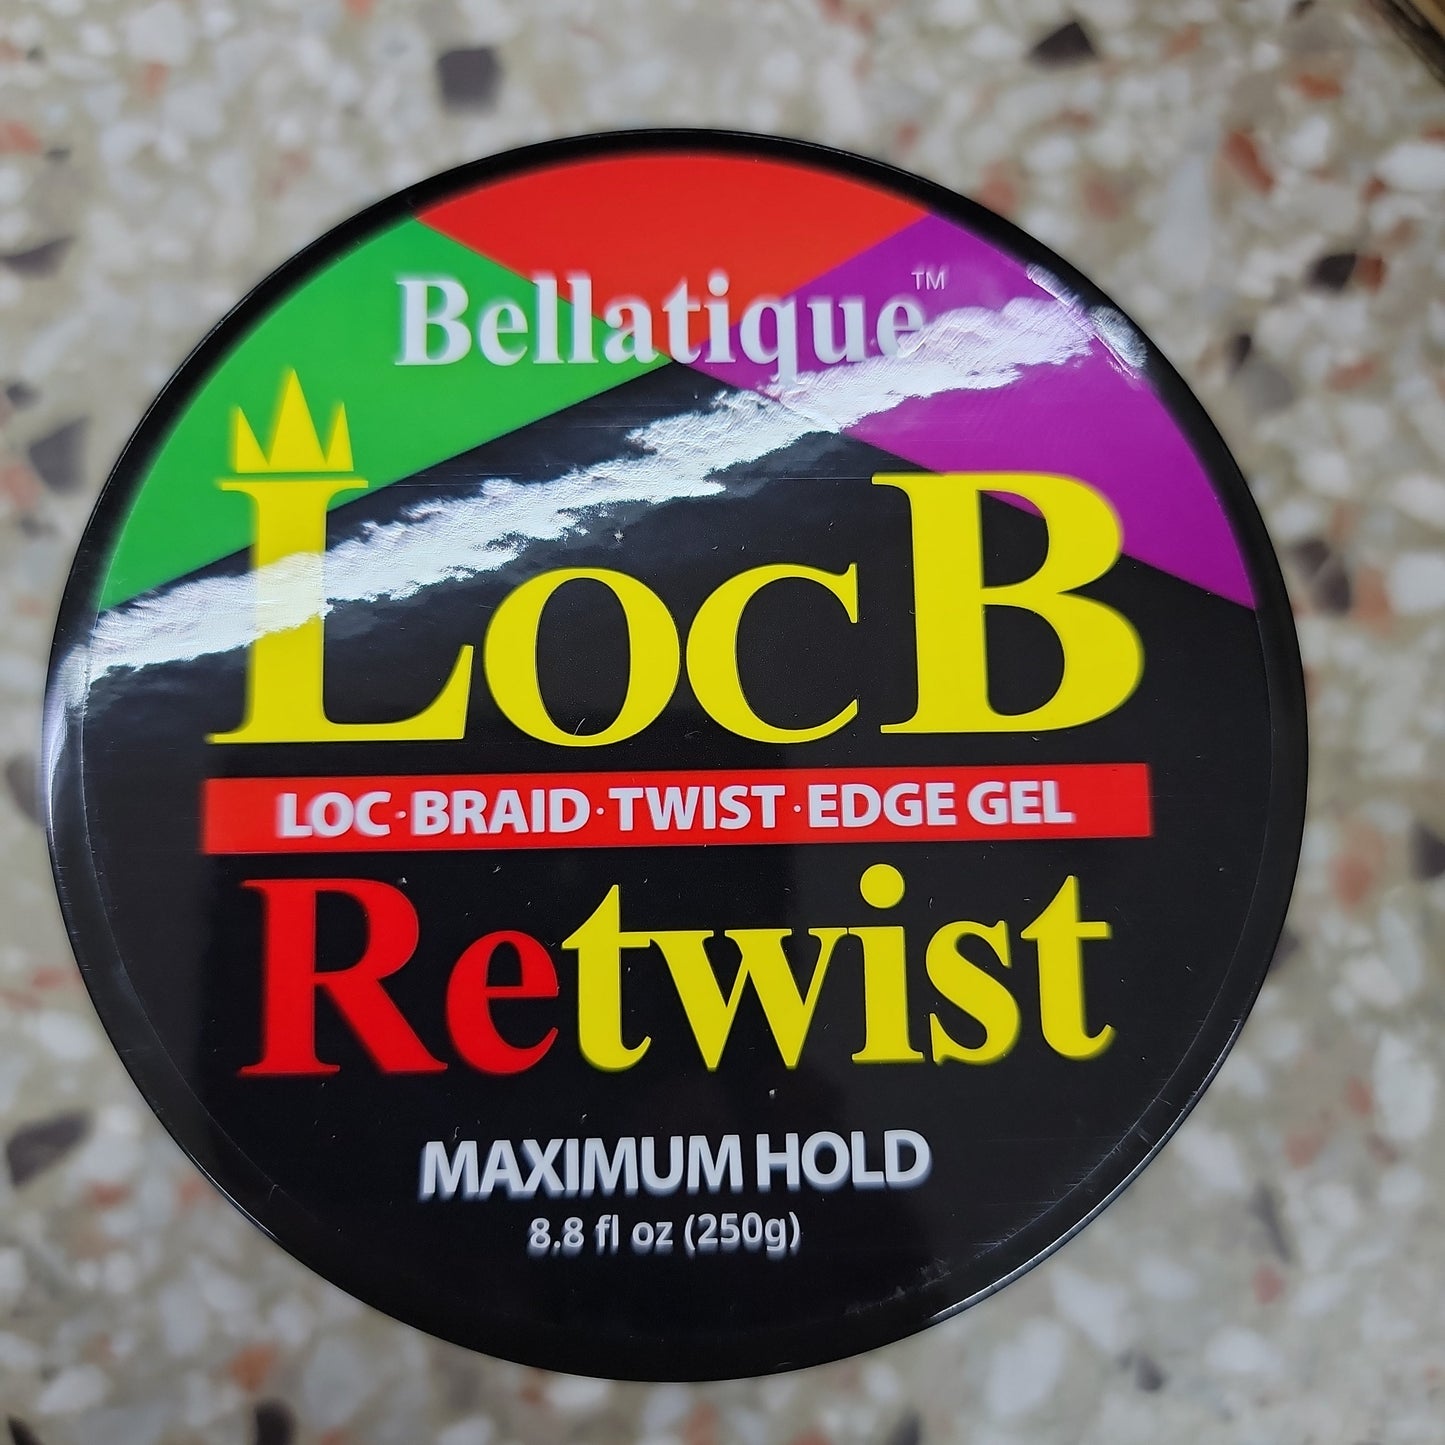 Bellatique LocB Loc•Braid•Twist•Edge Gel Retwist Maximum Hold 17.63oz